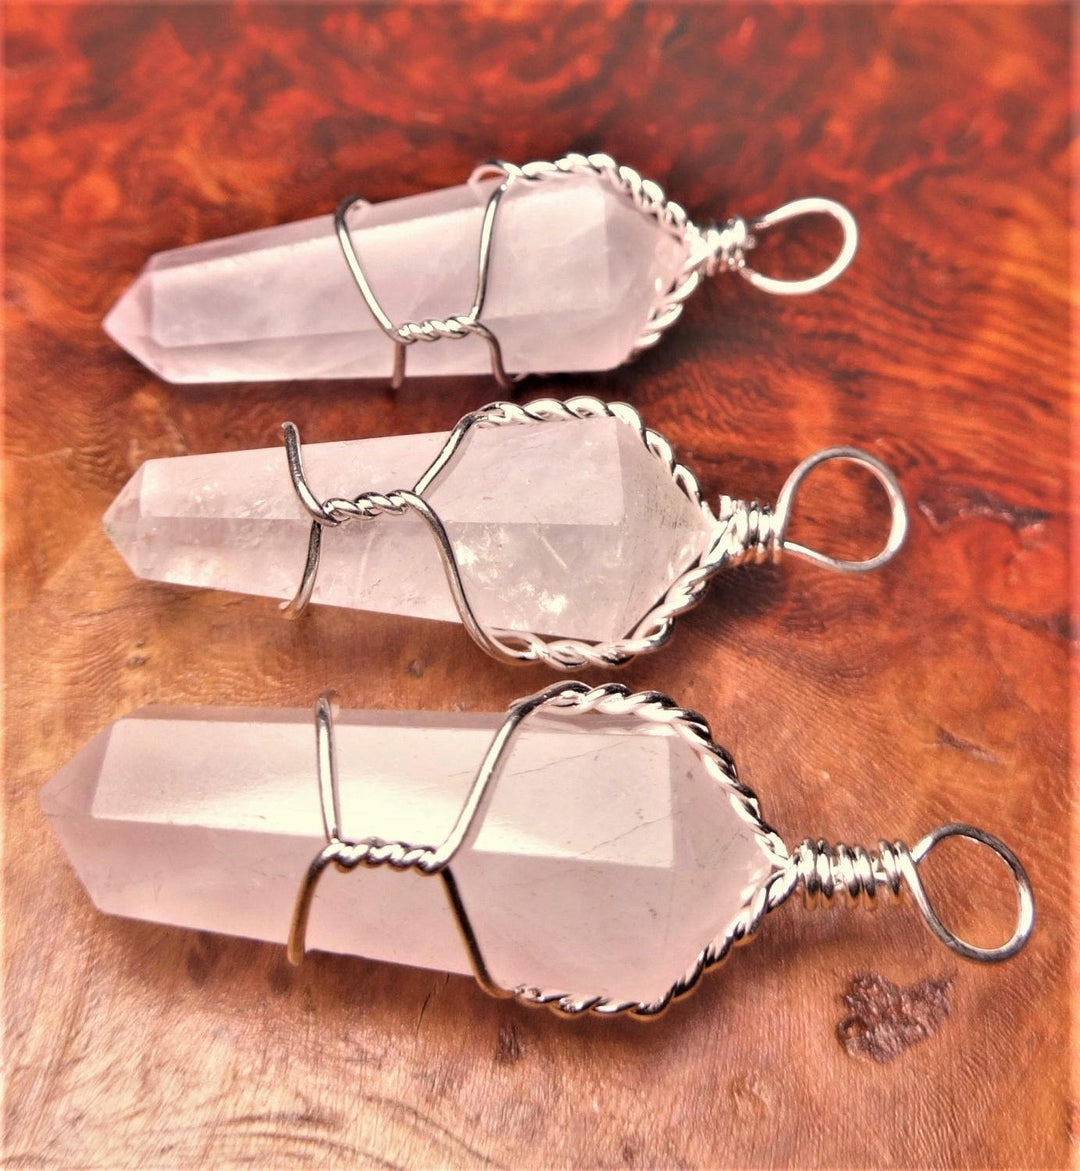 Bulk Wholesale Lot Of 5 Pieces - Rose Quartz Point Pendant Silver Wire Wrapped - Pendant Charm Bead Necklace Supply